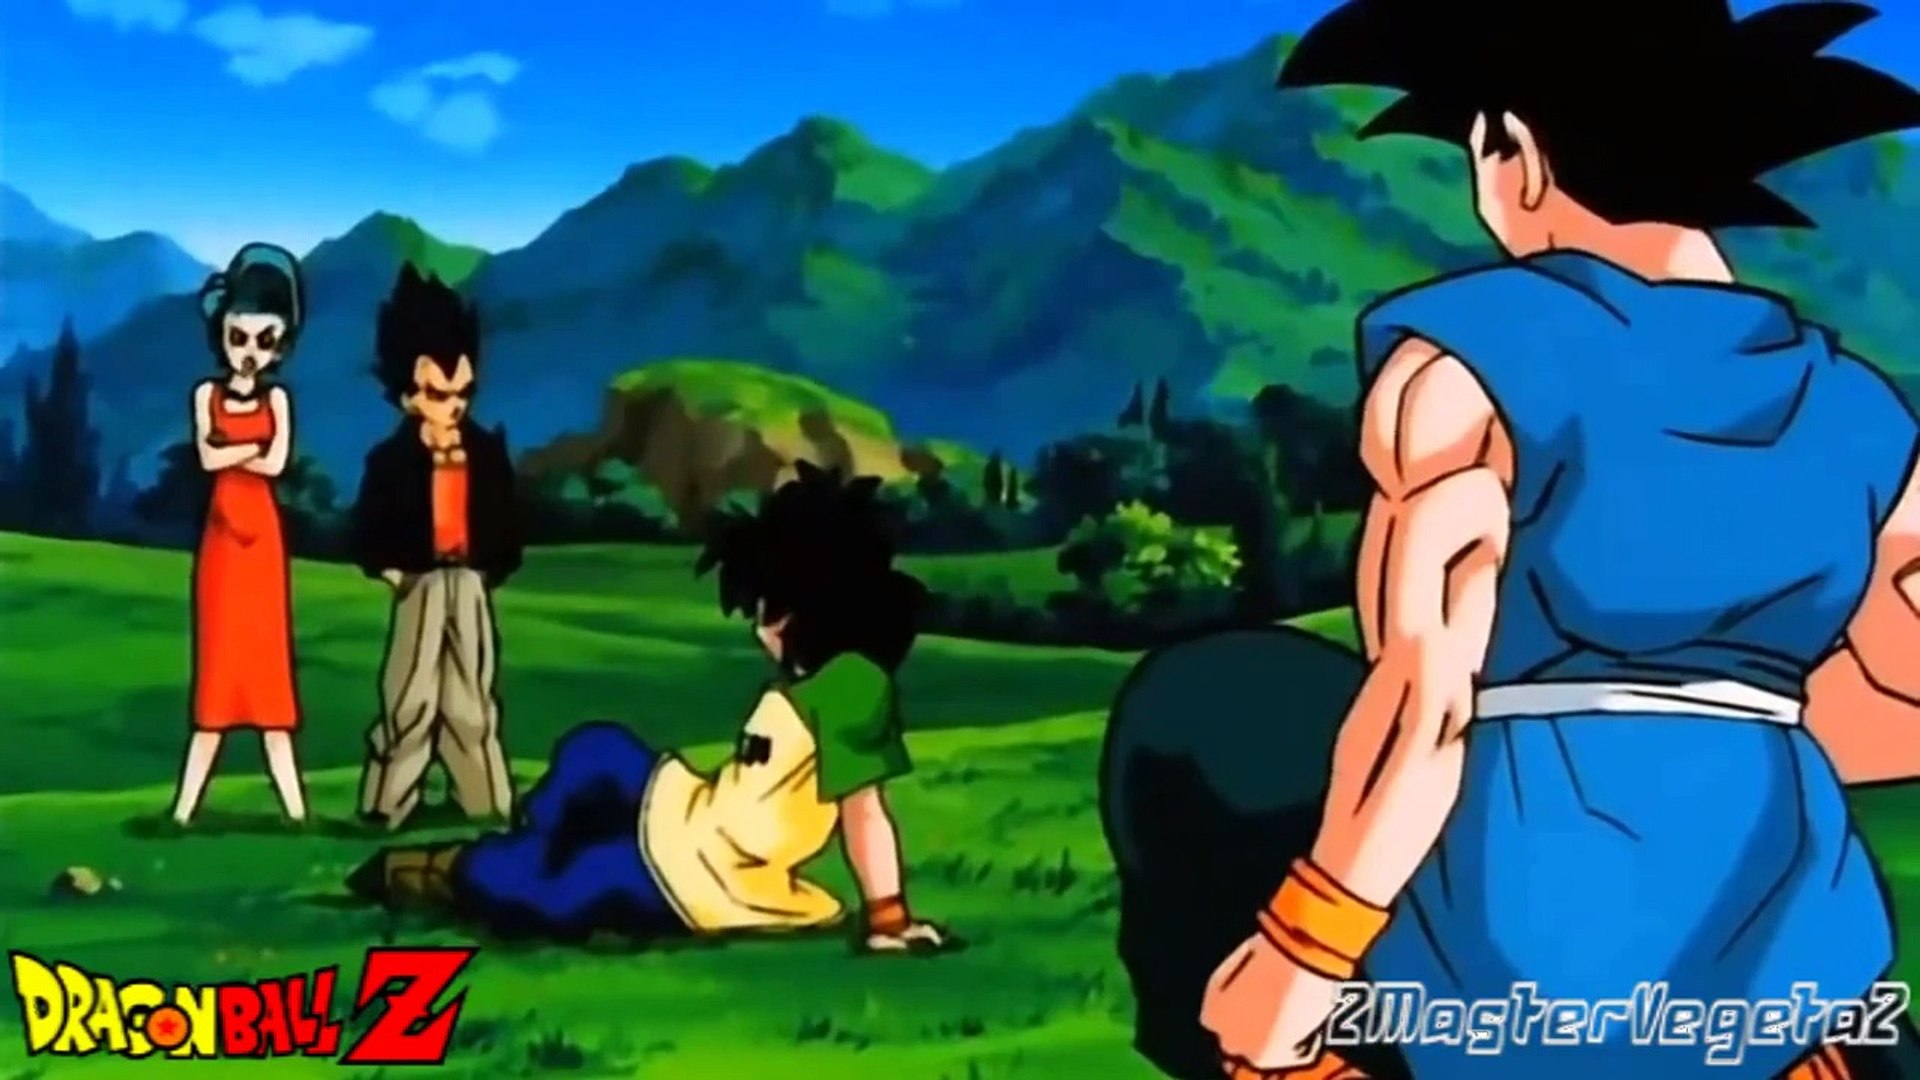 Vegeta And Bulma Visit Goku【1080p HD】 - video Dailymotion